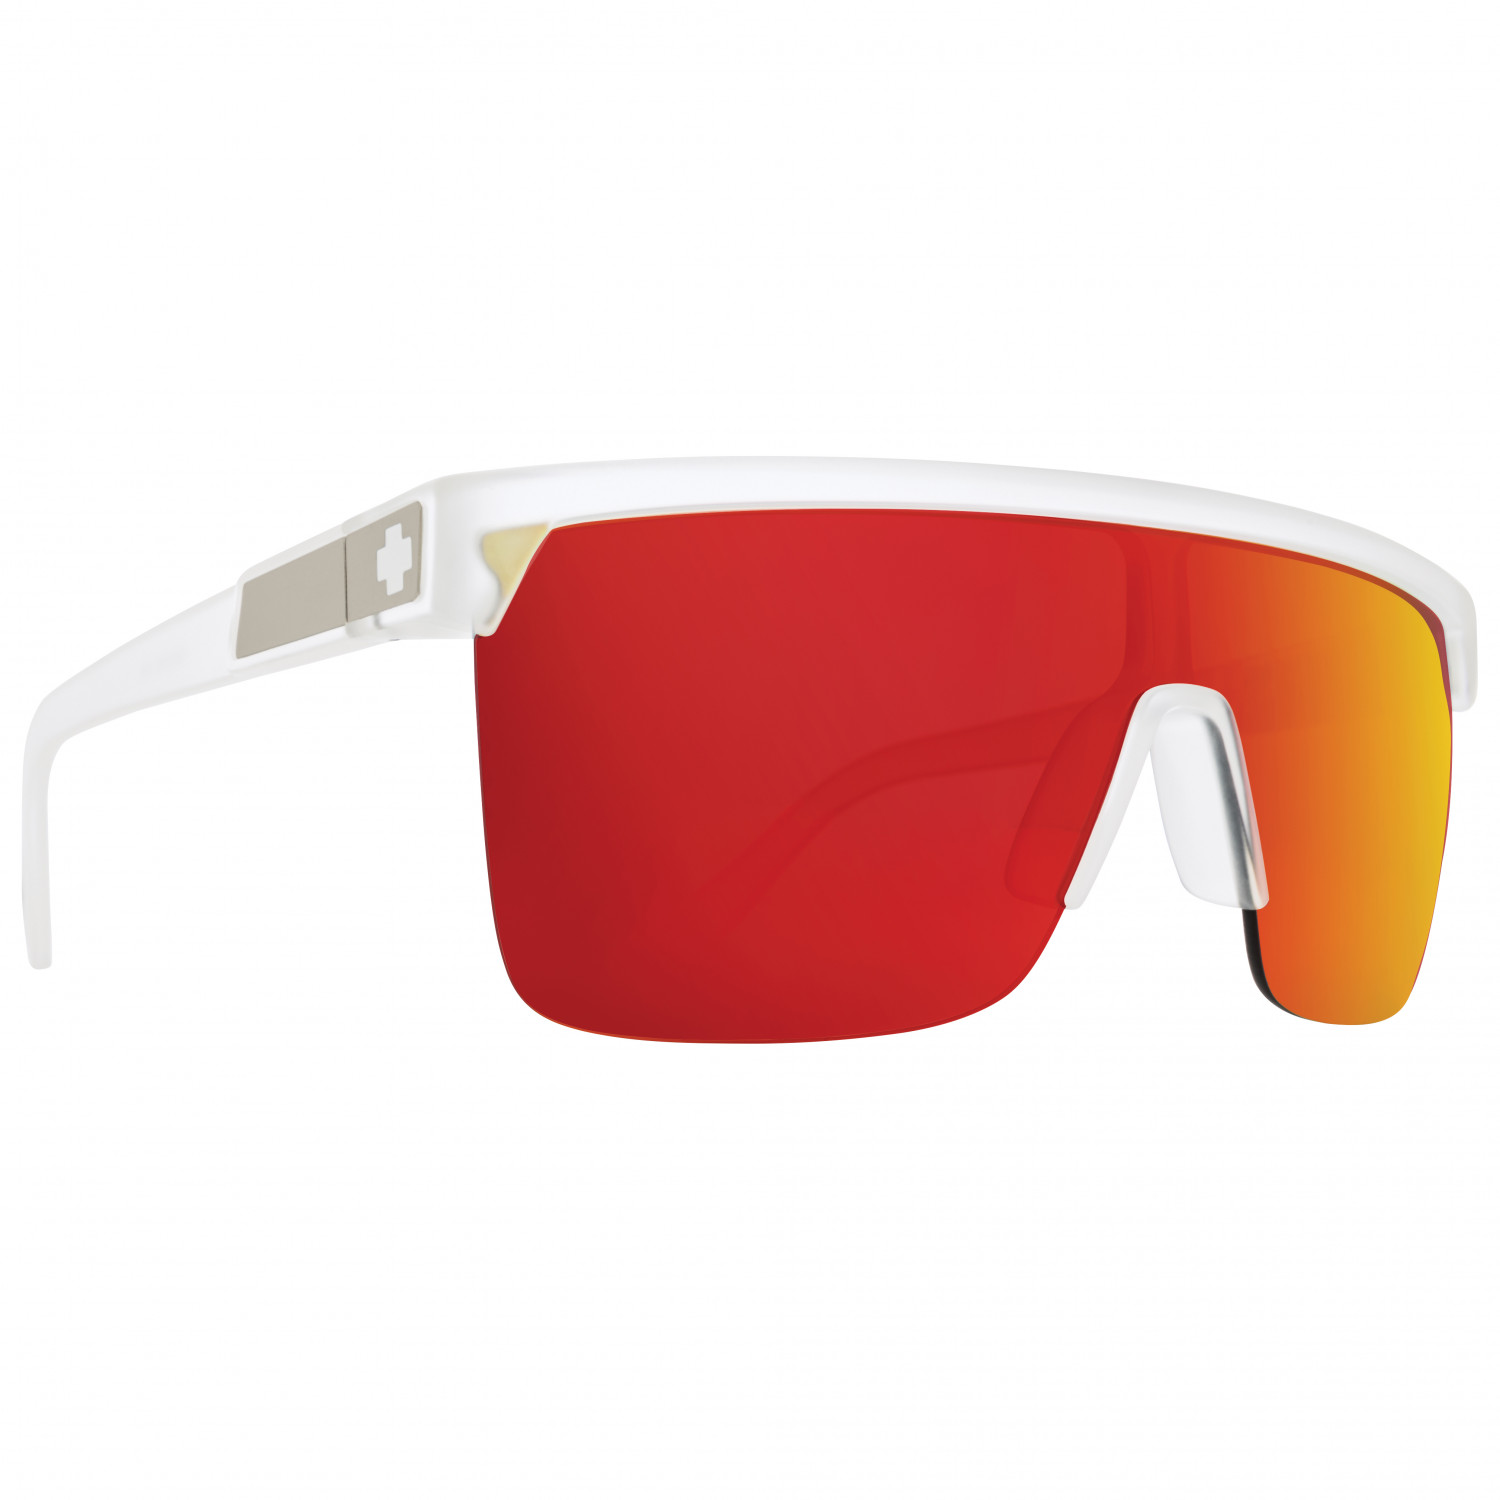 Солнцезащитные очки Spy+ Flynn 5050 S3 (VLT 13 17%), матовый кристалл